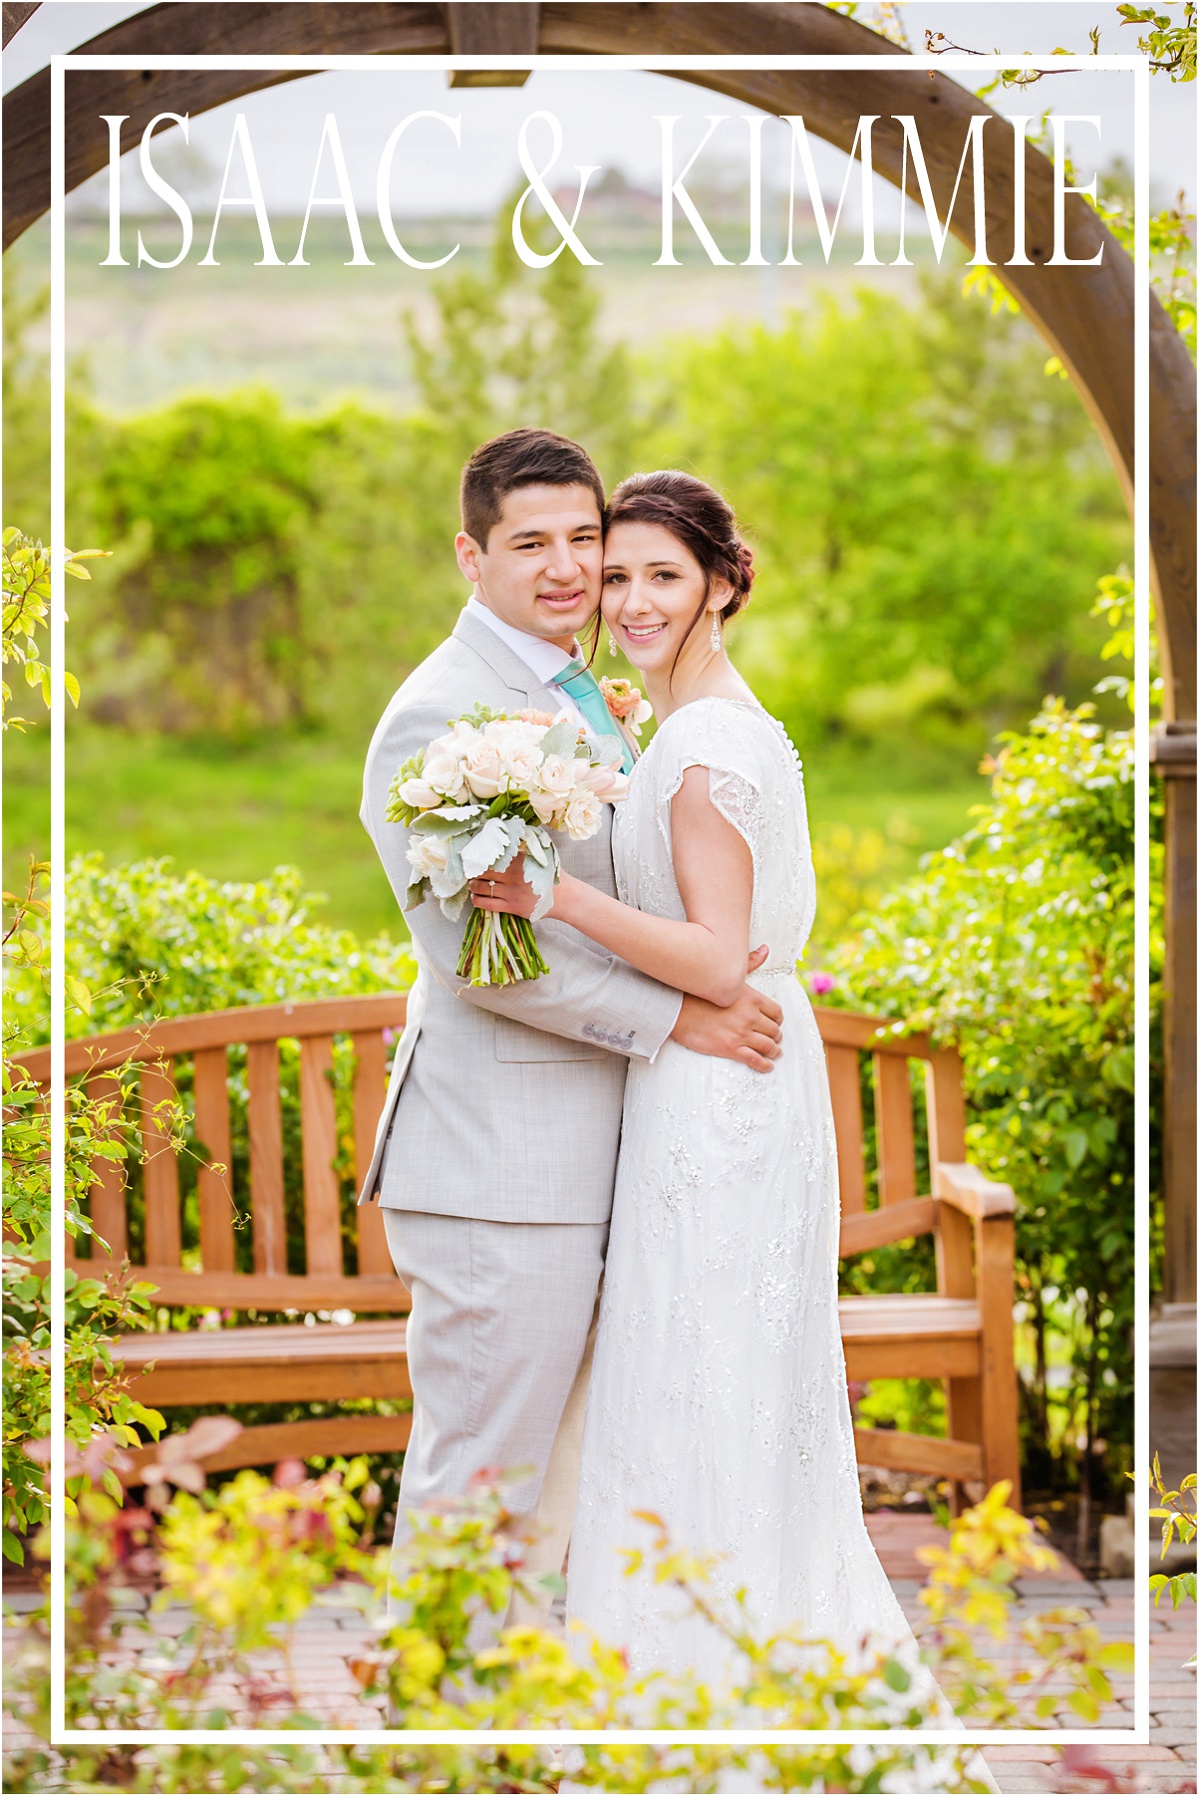 Terra Cooper Photography Weddings Brides 2015_5364.jpg